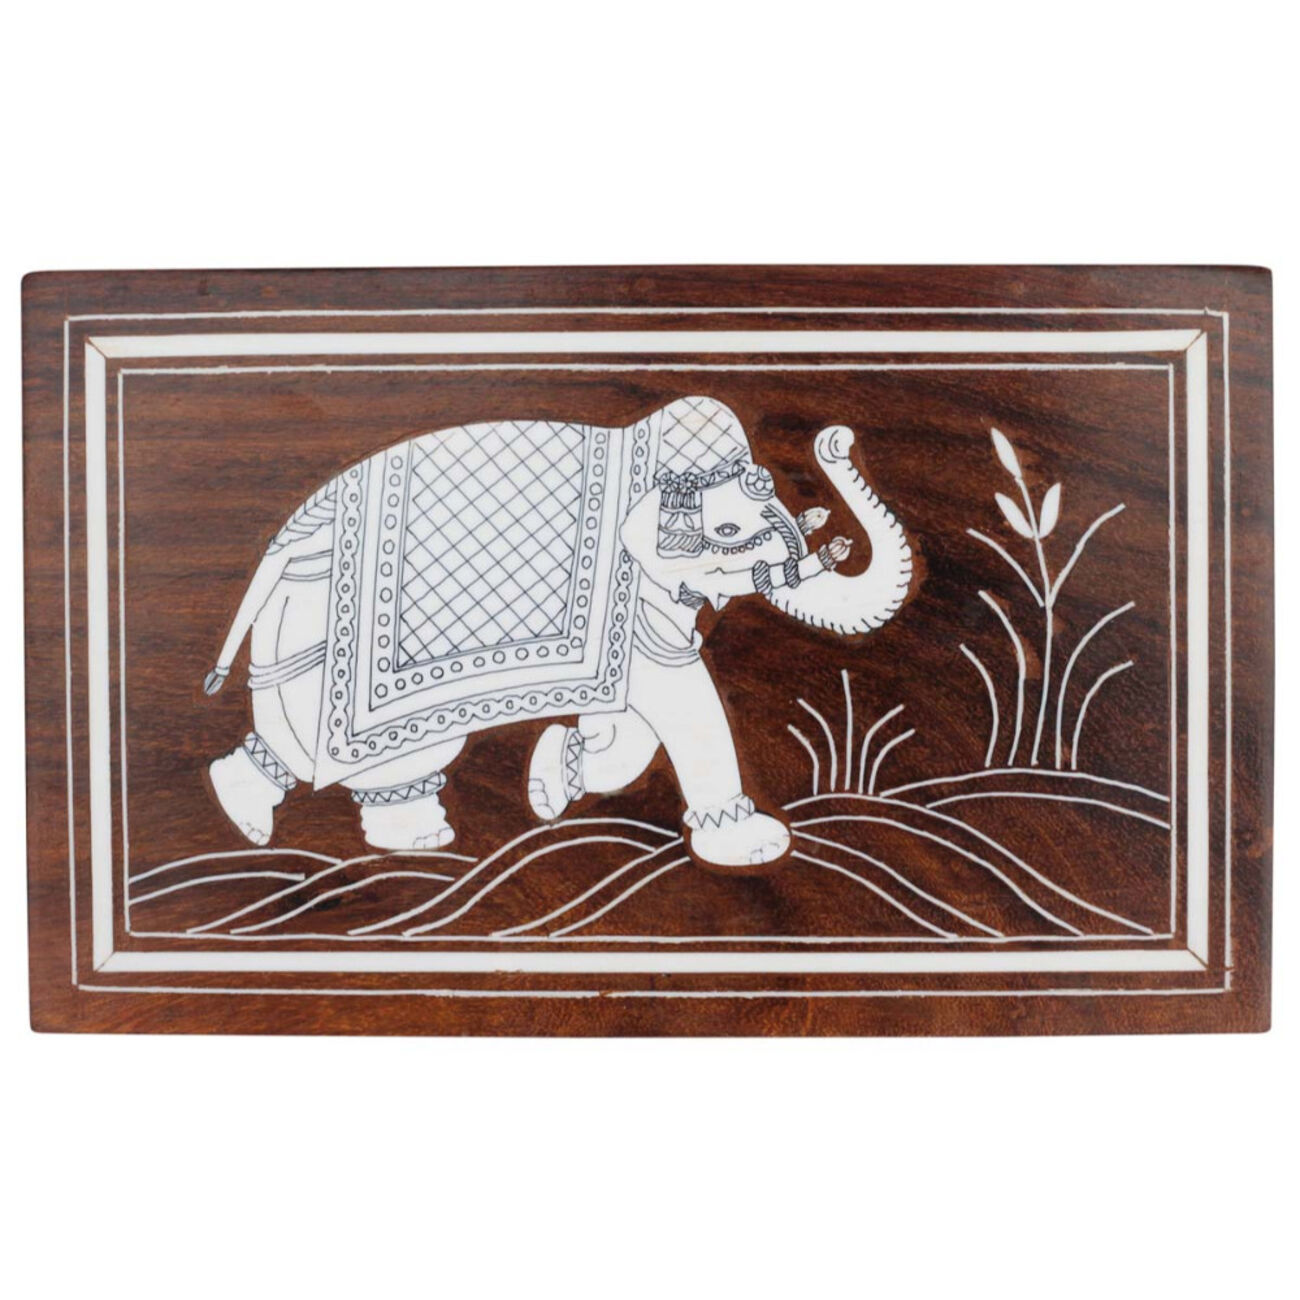 Benzara Handmade Mango Wood Jewelry Box With Elephant Design, Brown